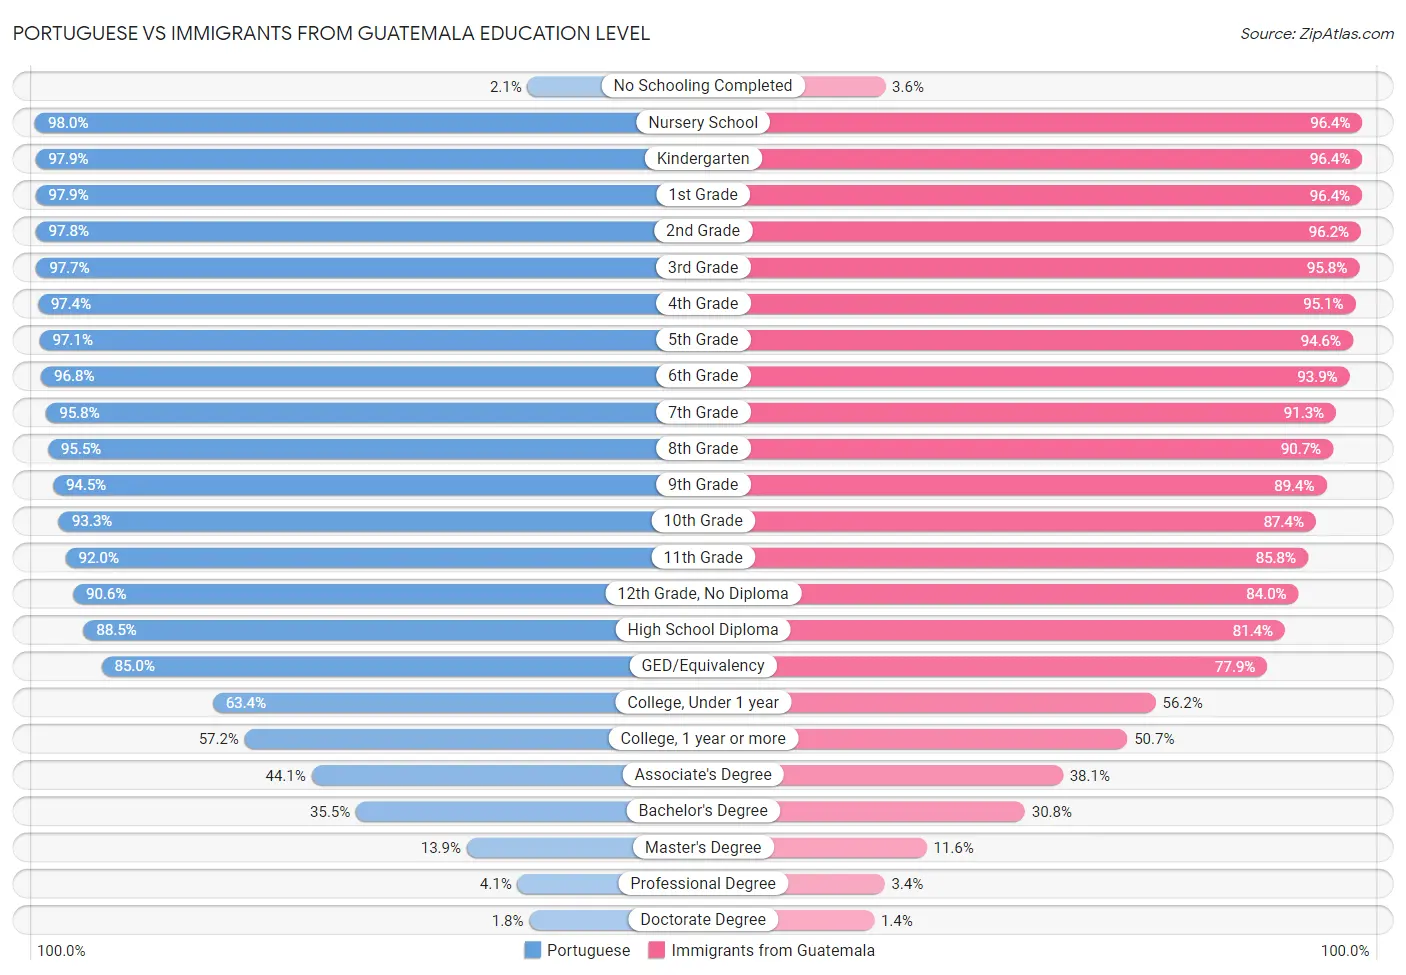 Portuguese vs Immigrants from Guatemala Education Level